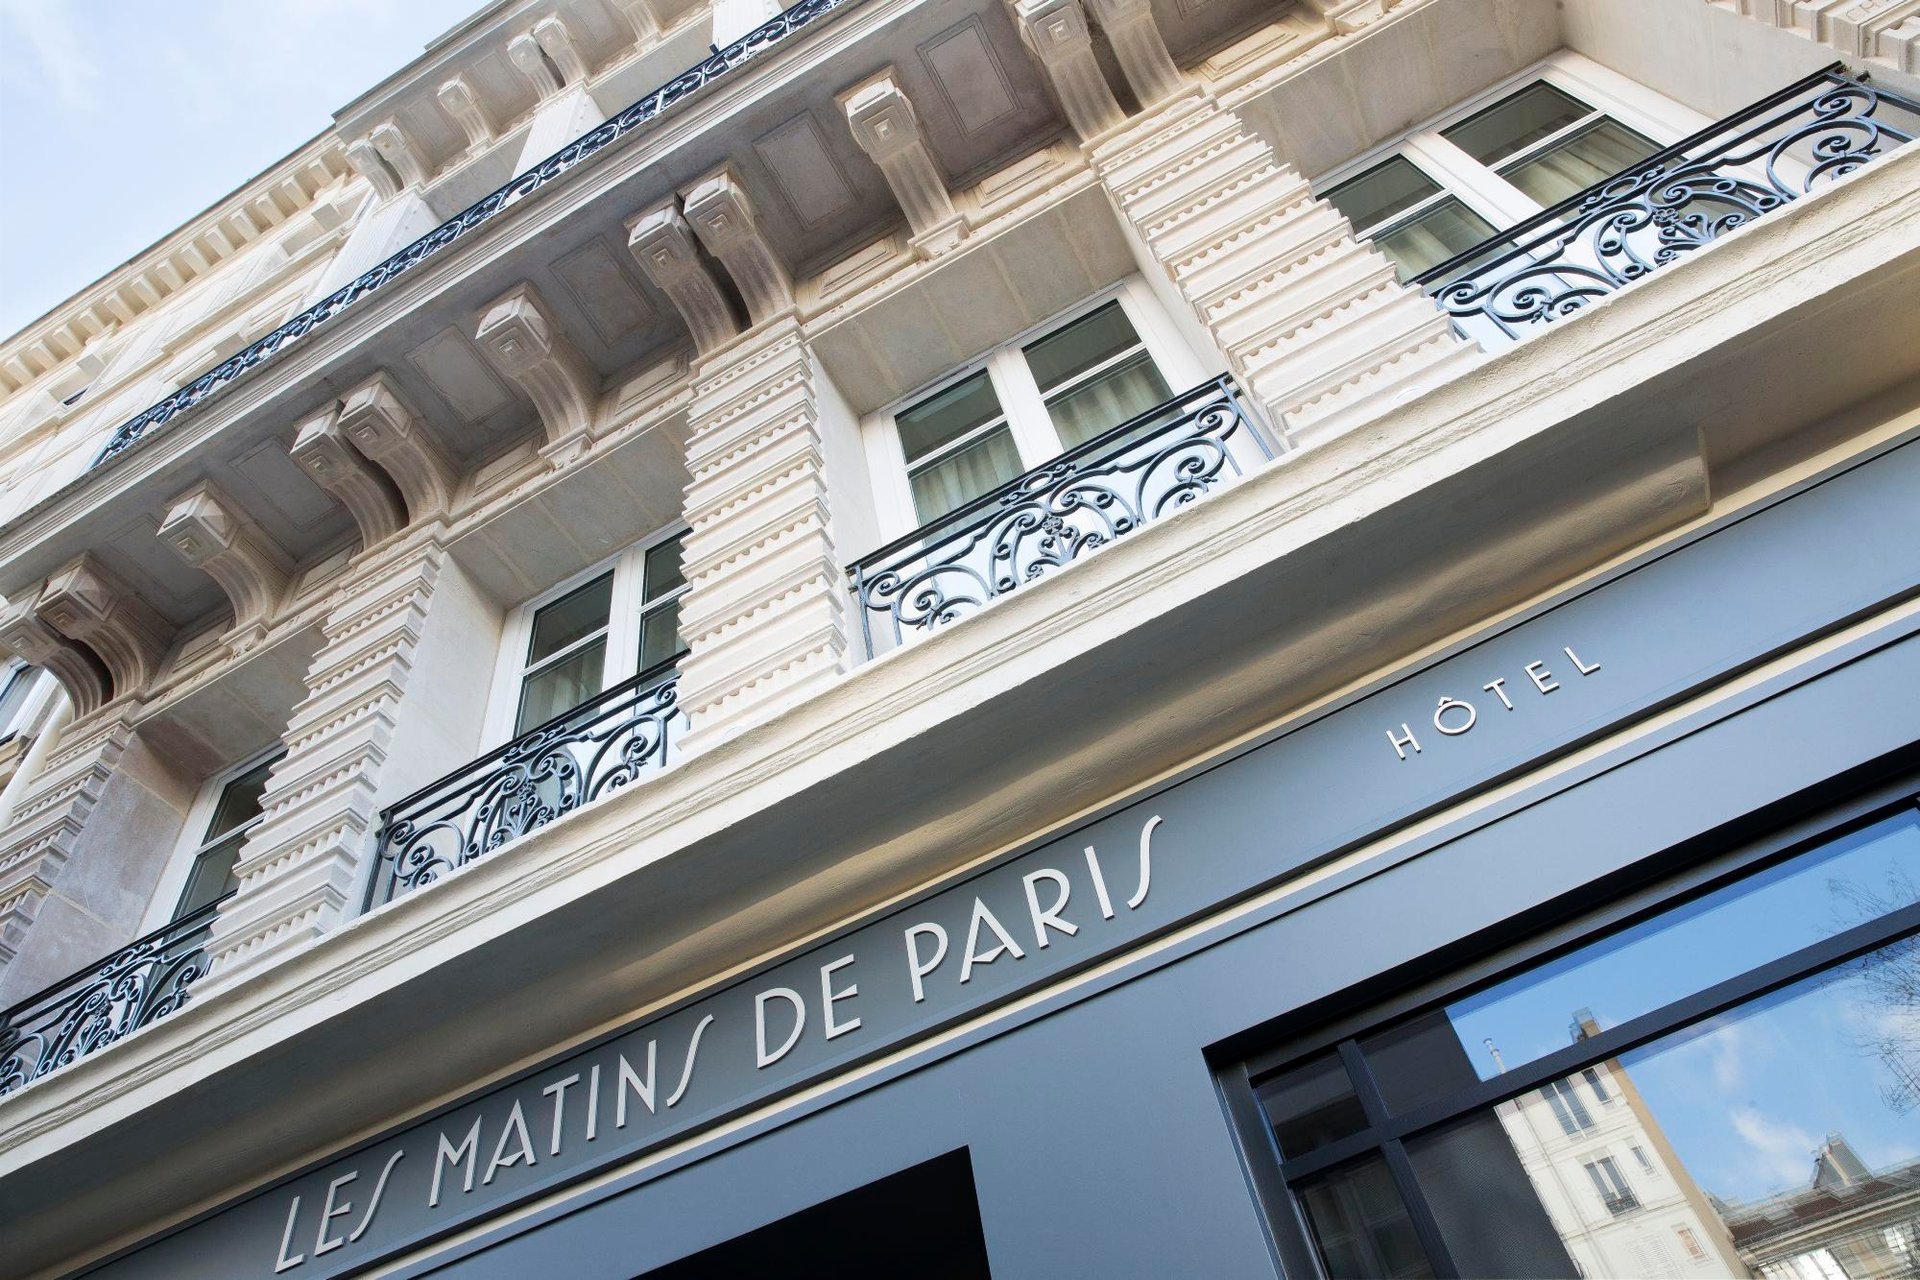 Hotel Les Matins de Paris Facade